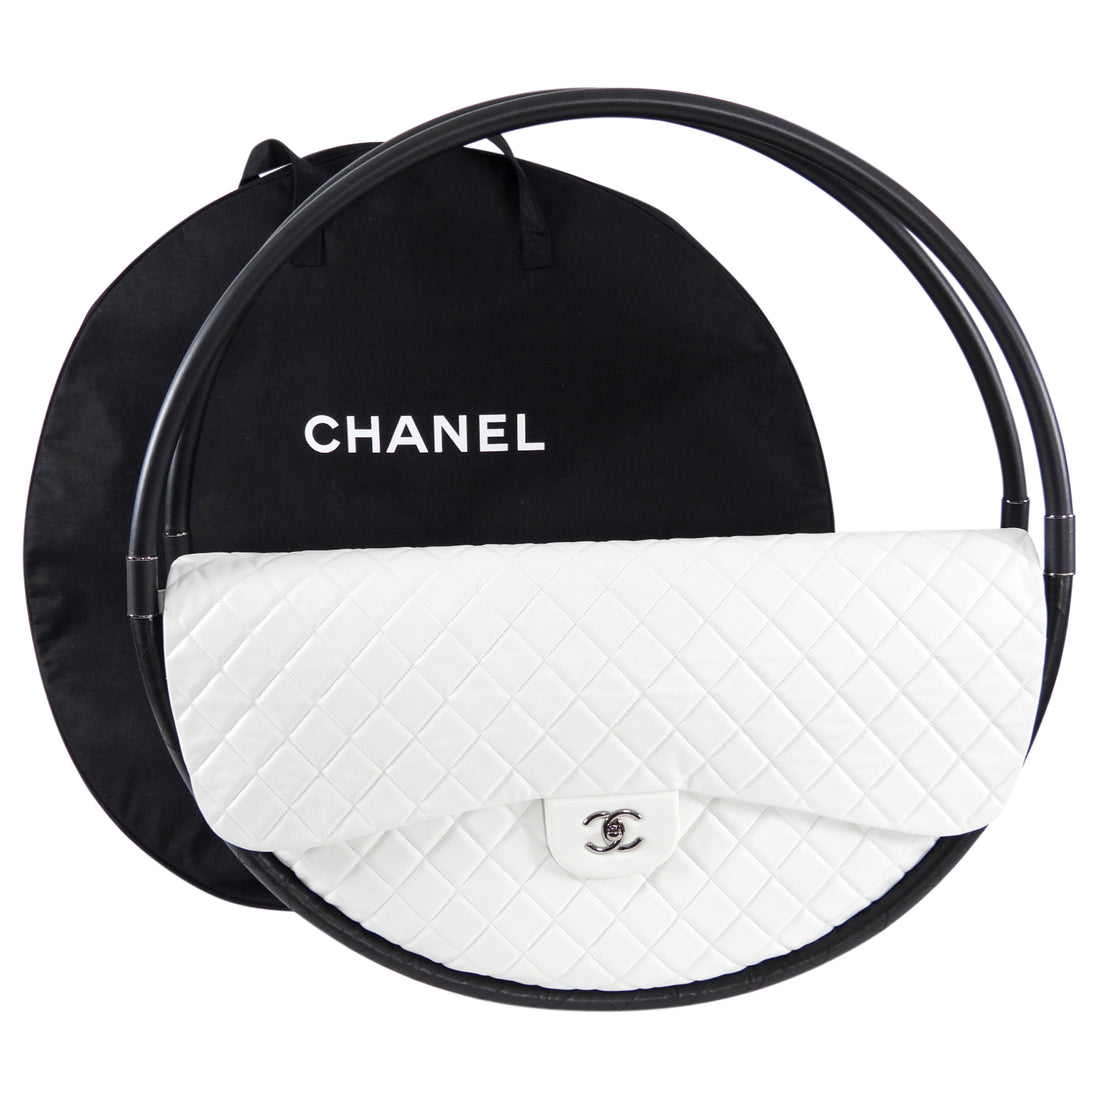 Chanel Rare Runway Hula Hoop Bag 2013 90cm - the Largest Ever Chanel Bag